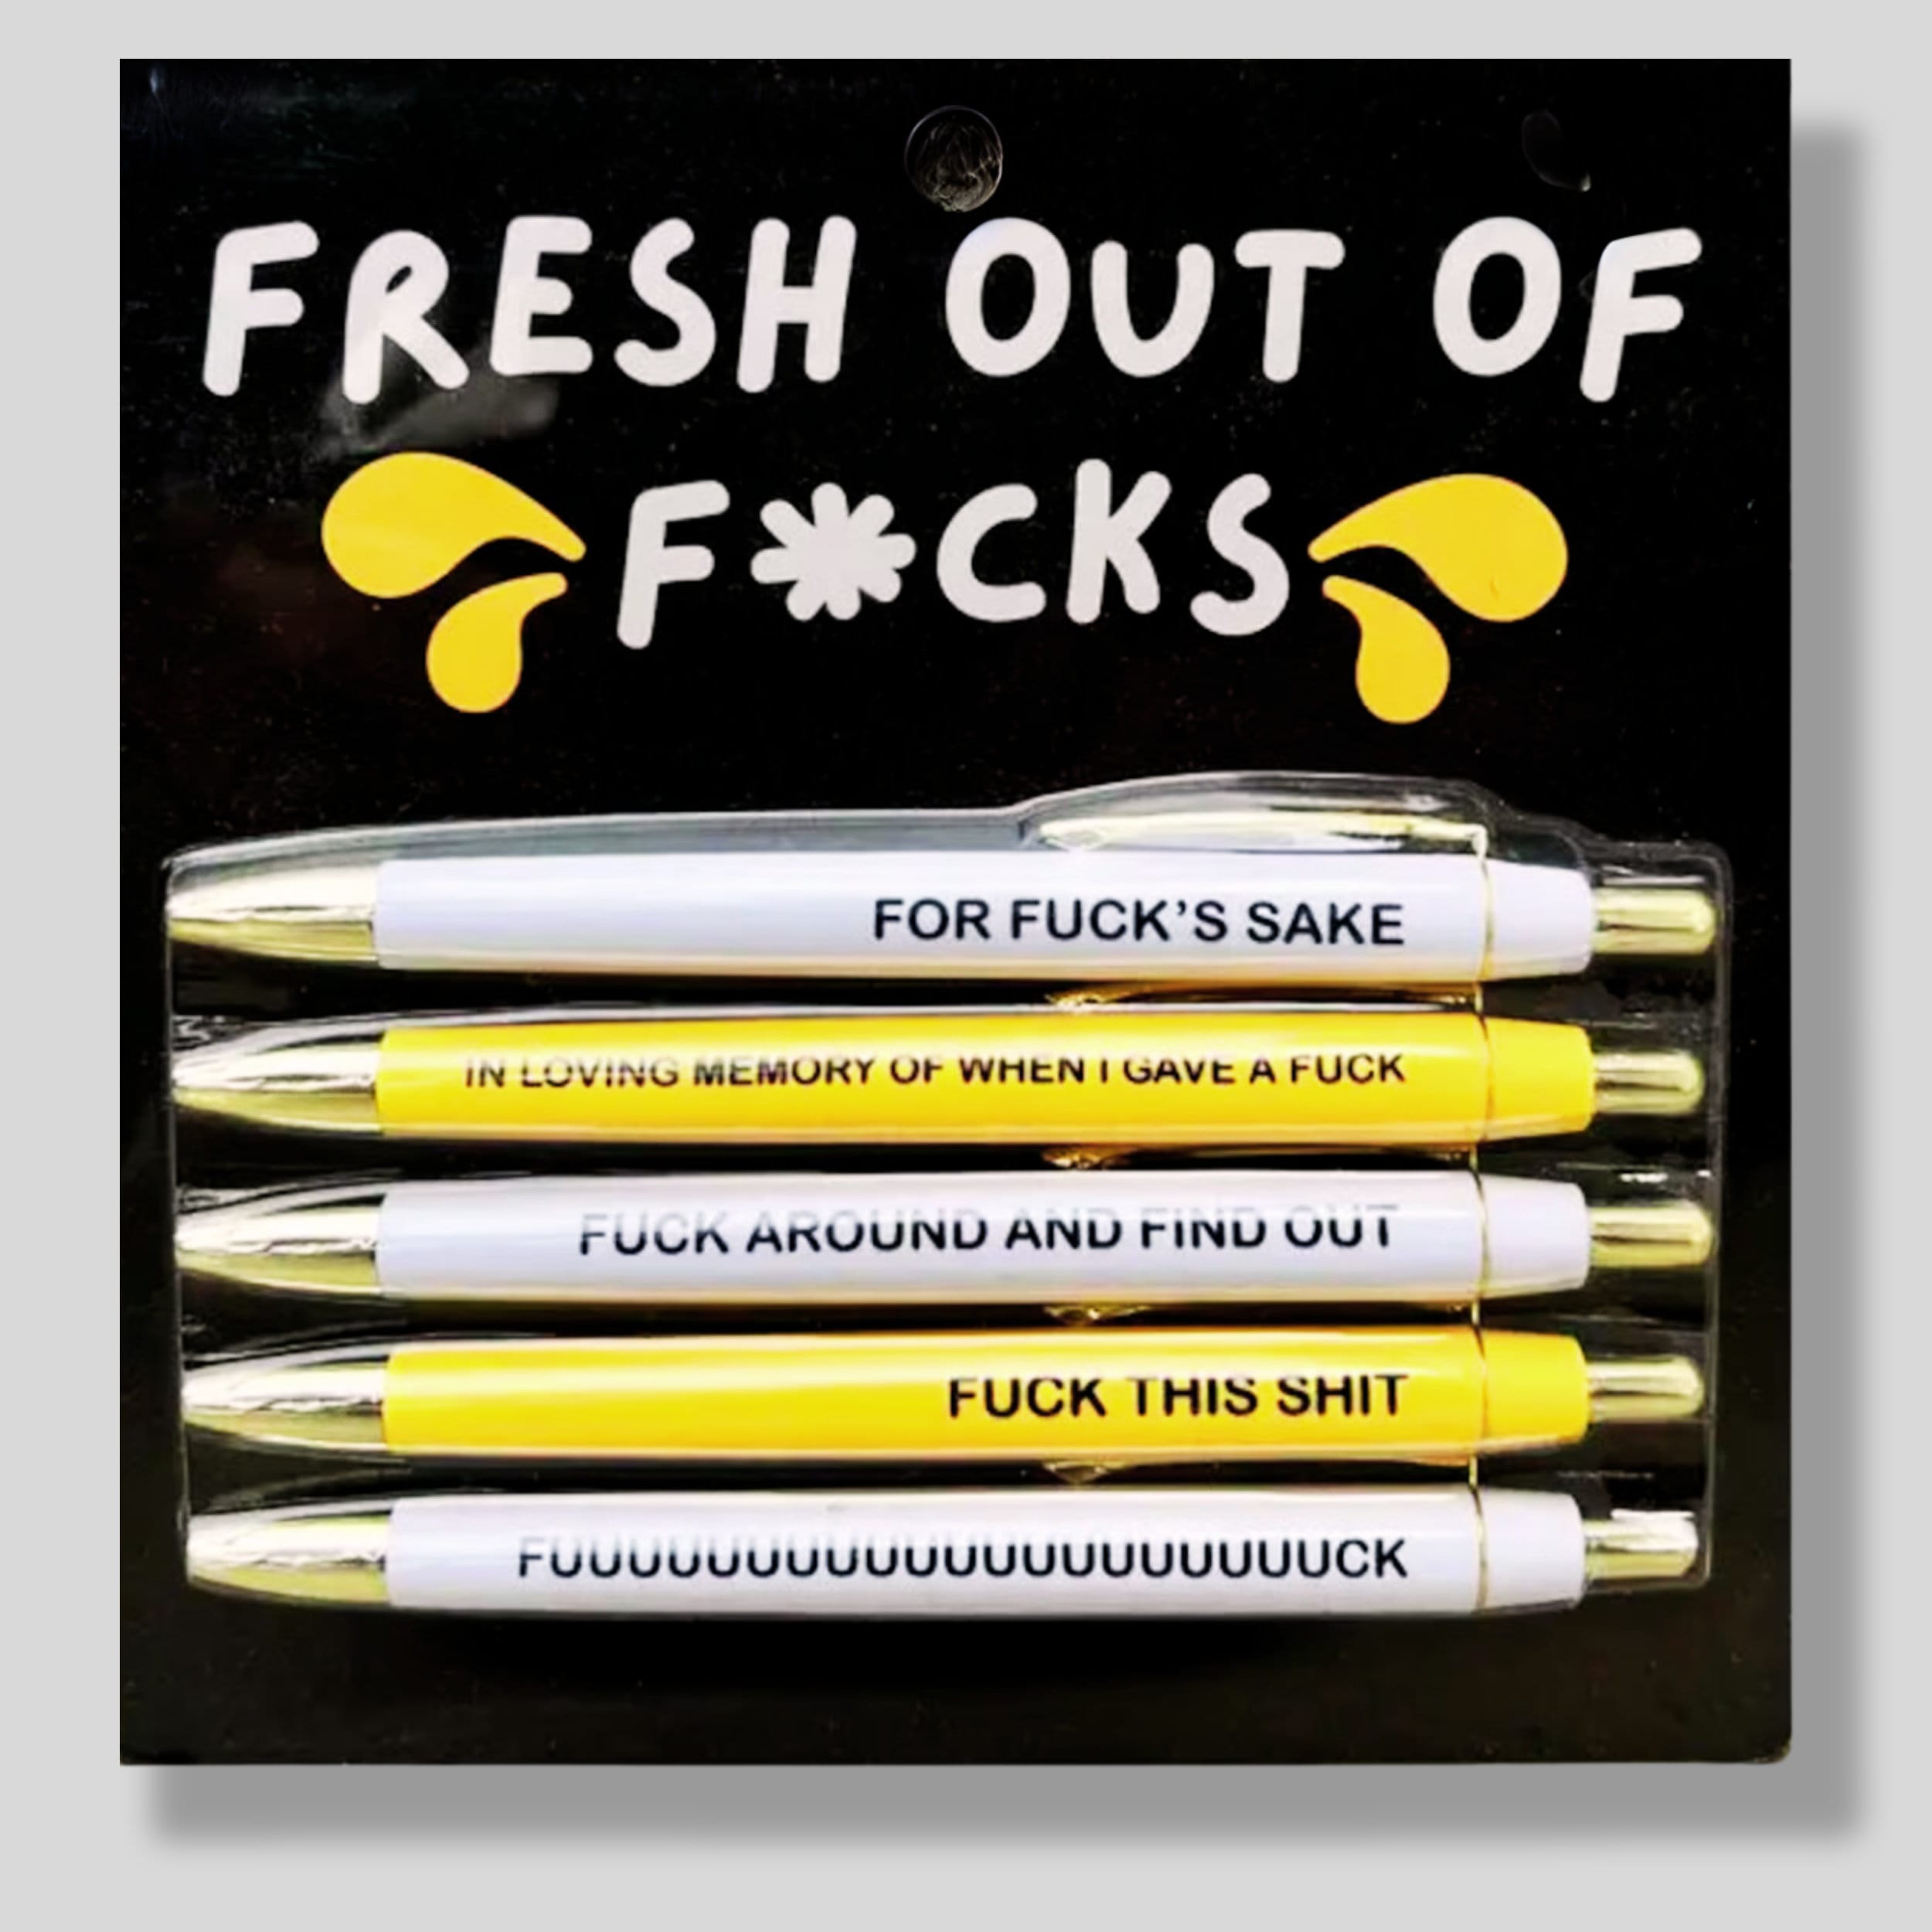 New Hotsales! Adults Creative Ballpoint Pen Novelty Prank Funny